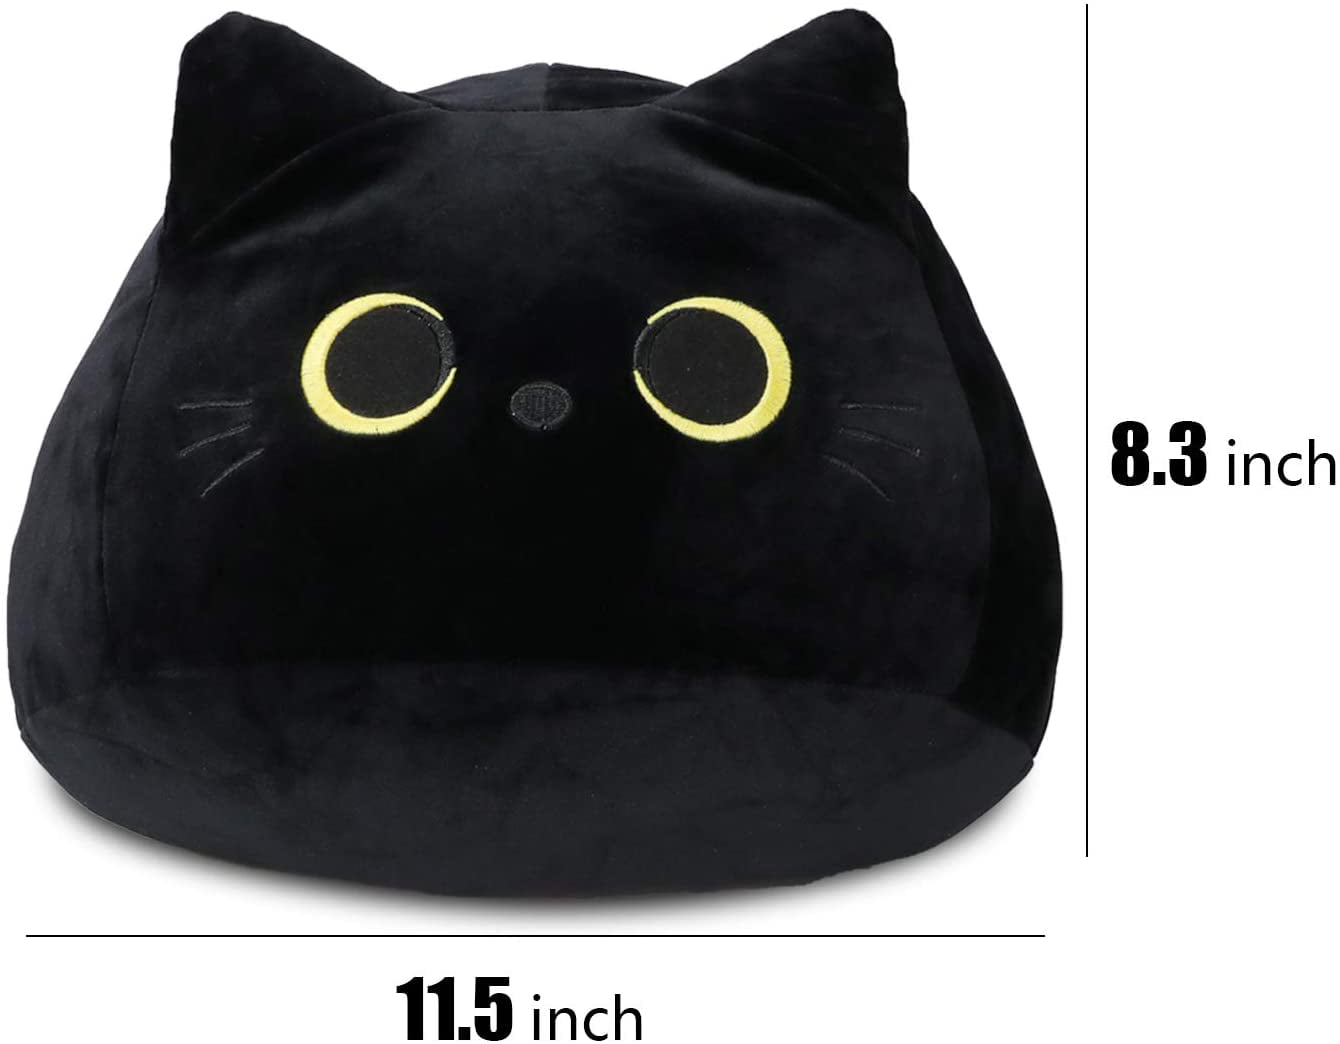  Desdfcer Black Cat Plush, 3D Cat Stuffed Animal Toy